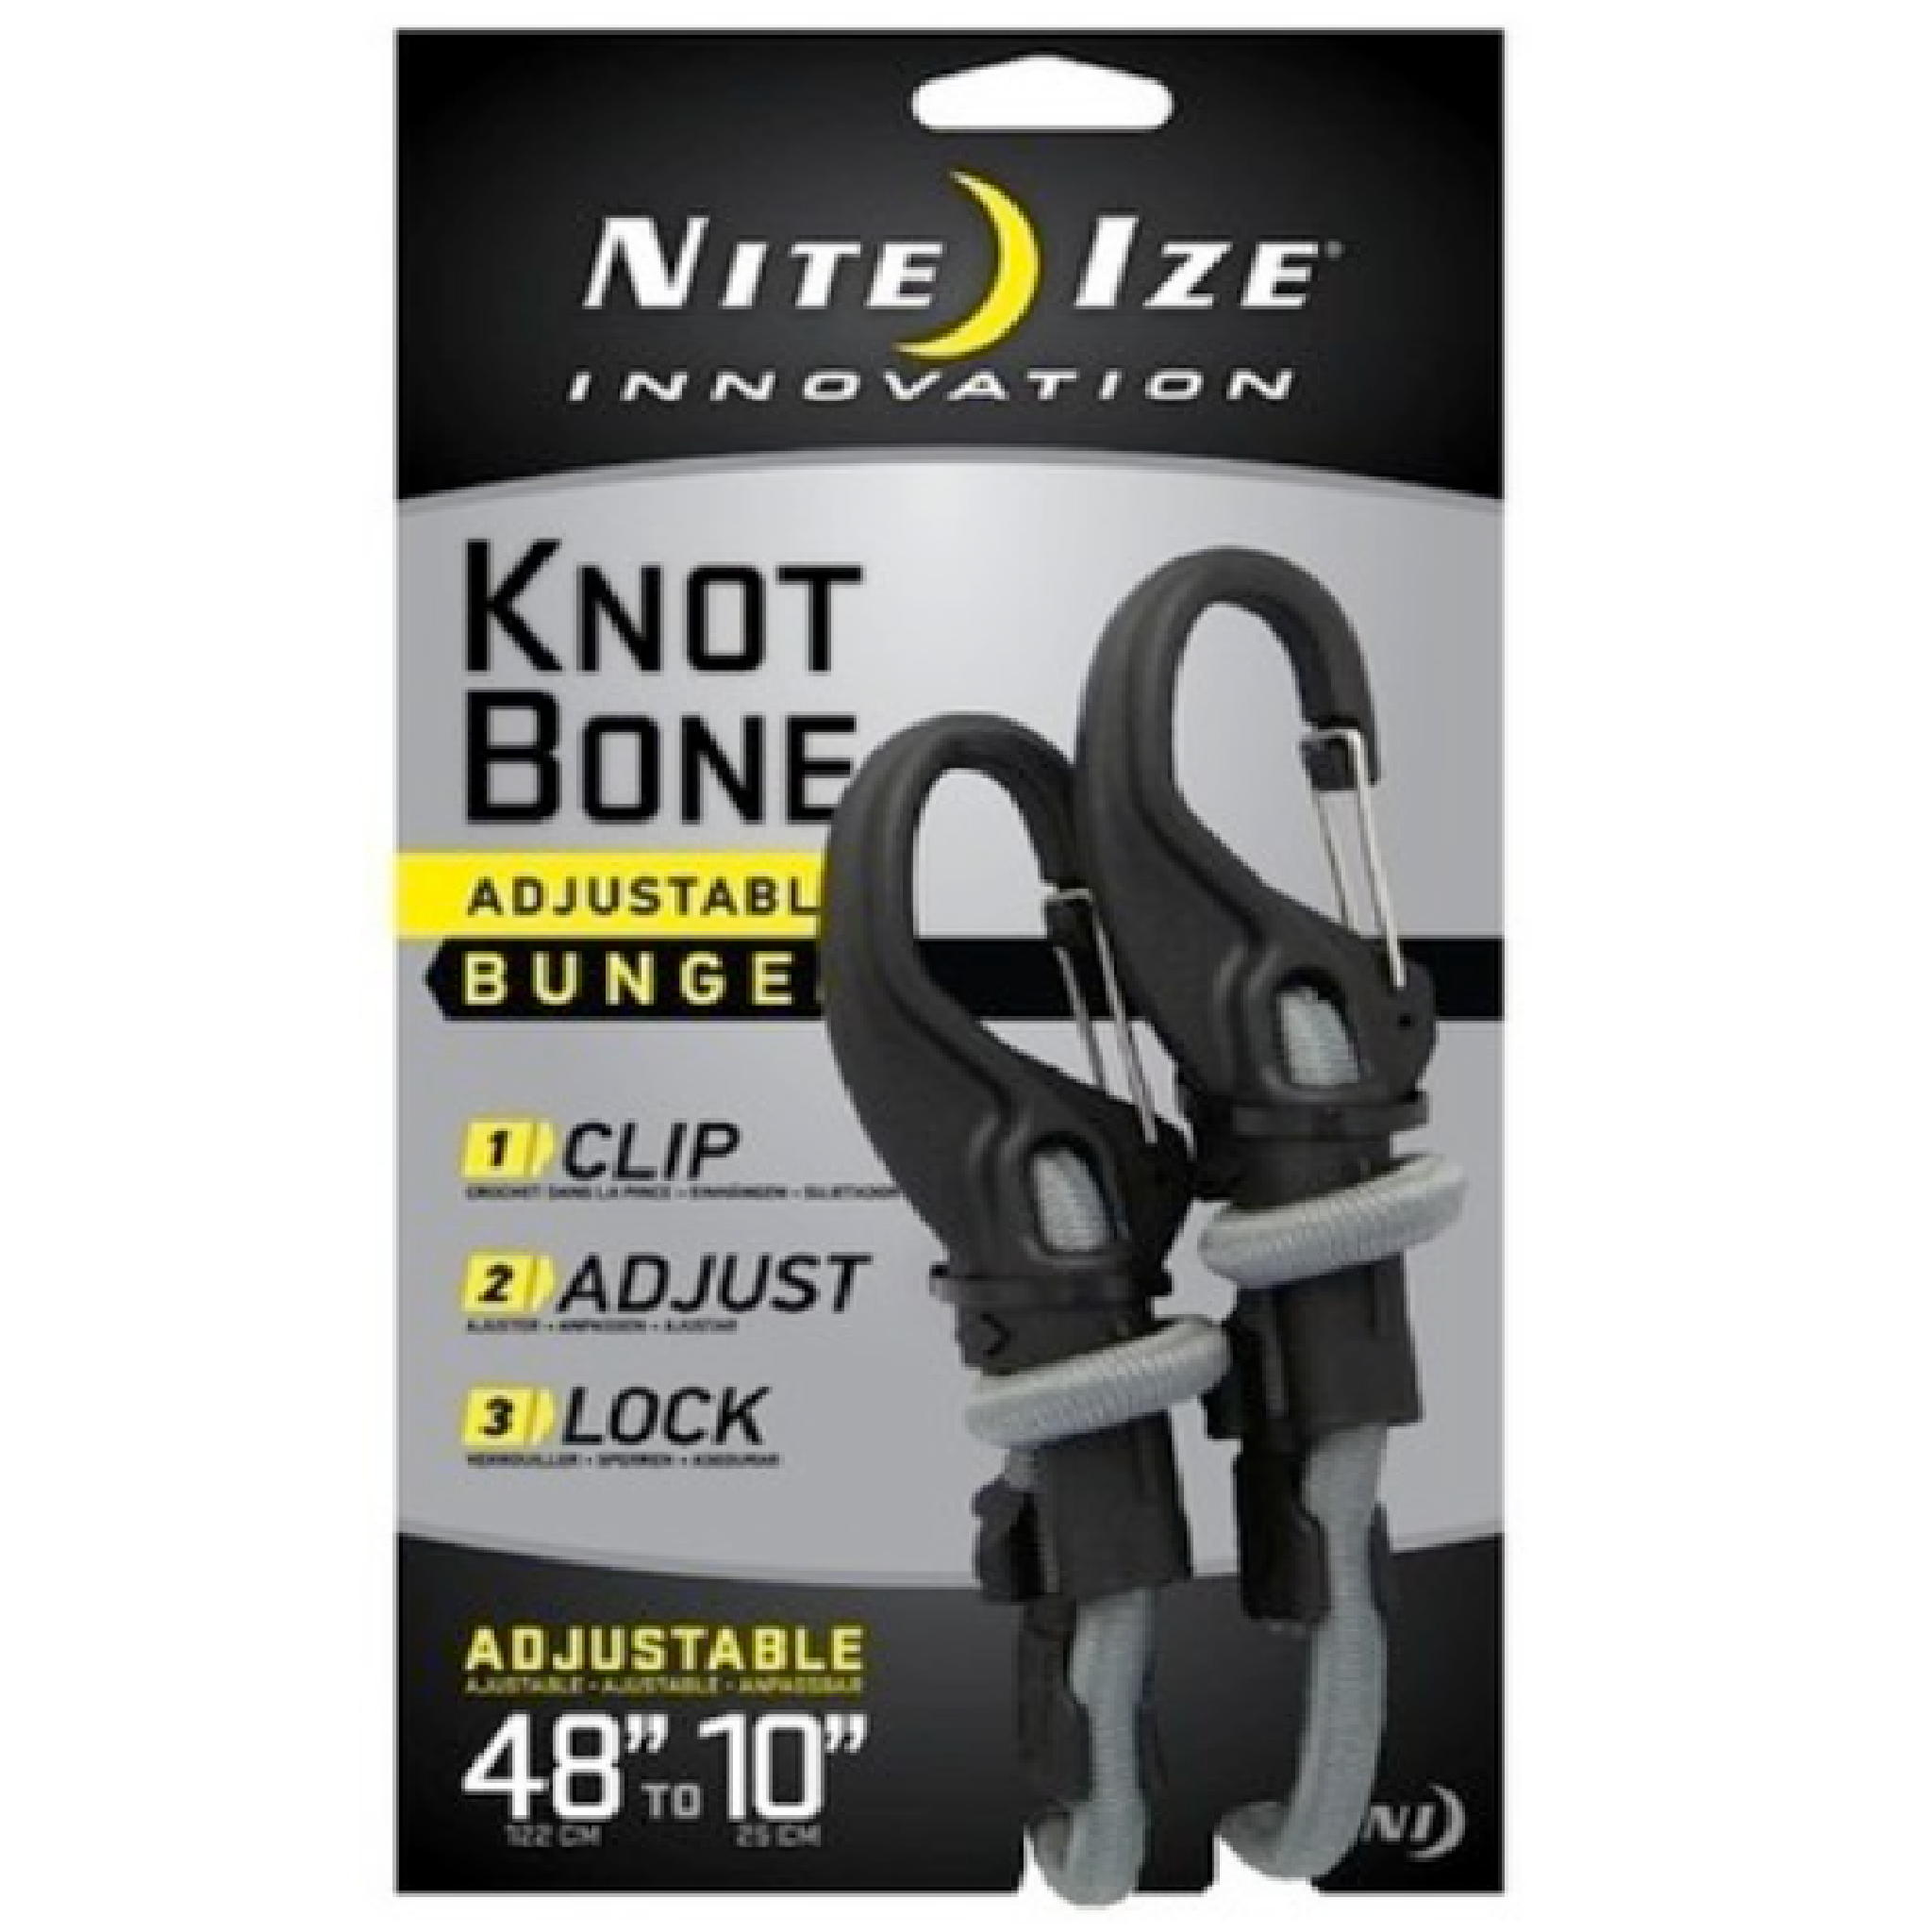 NITE IZE KnotBone Adjustable Bungee 10" To 48" LARGE